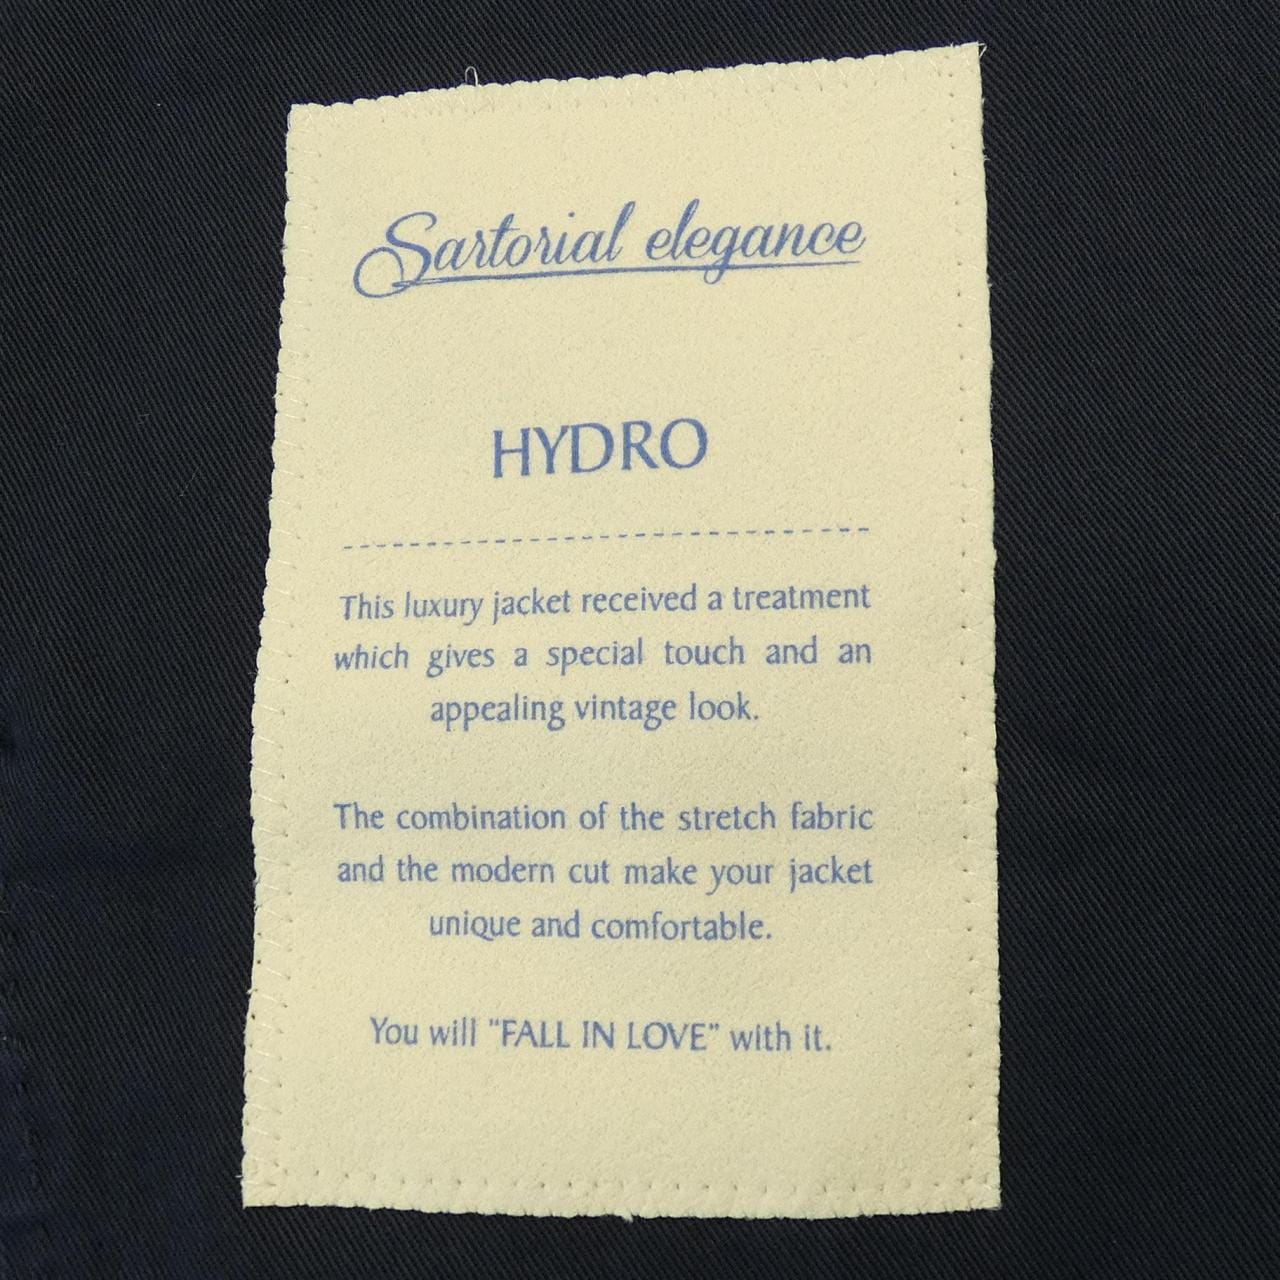 HYDRO jacket